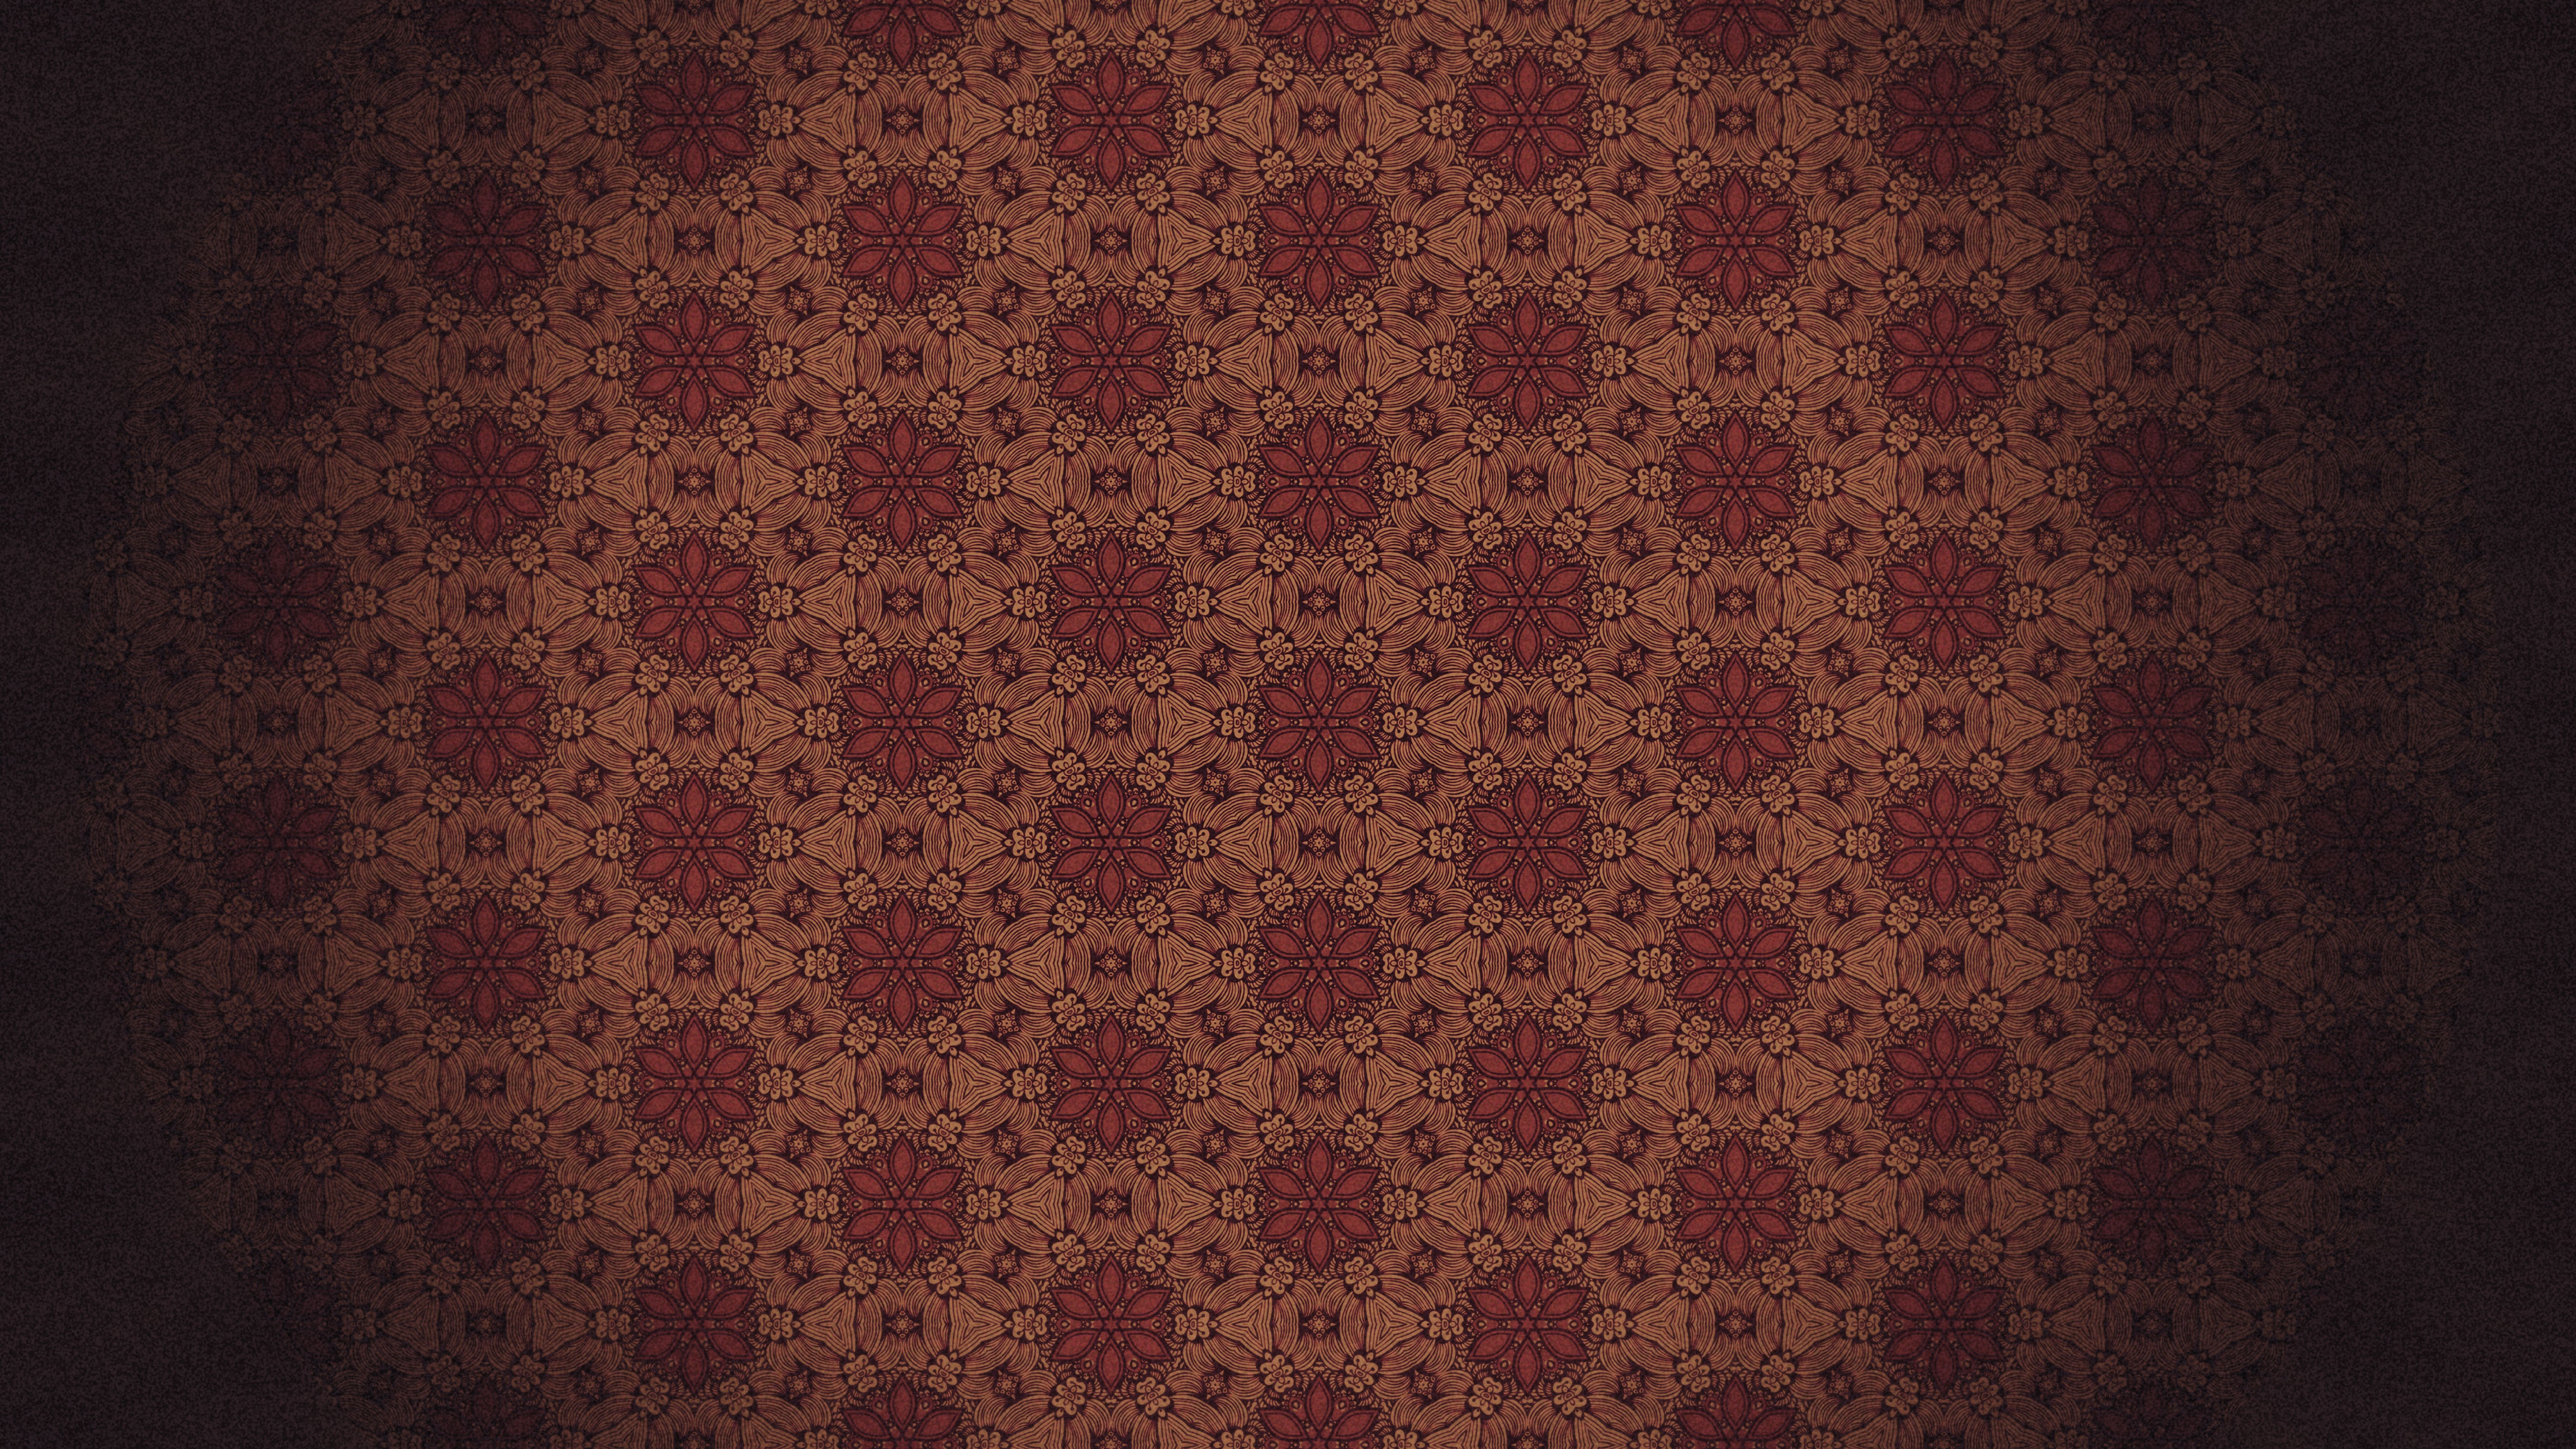 Red and Black Vintage Floral Seamless Pattern Wallpaper Design